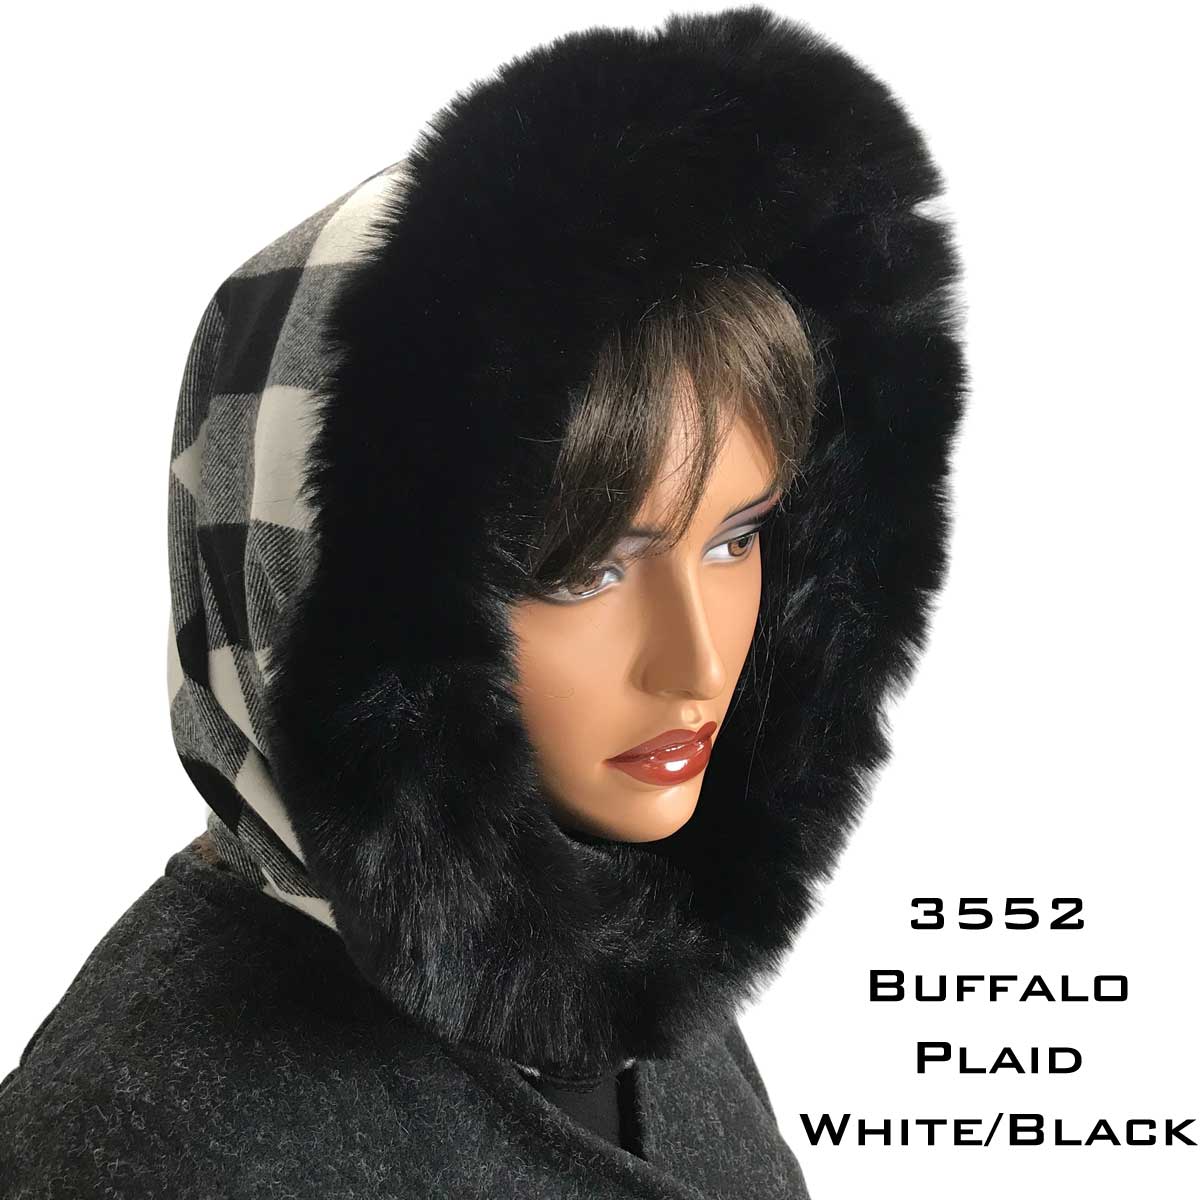 3552 - Fur Trimmed Infinity Hood  Buffalo Plaid White/Black<br> Black Fur Trimmed Infinity Hood - 